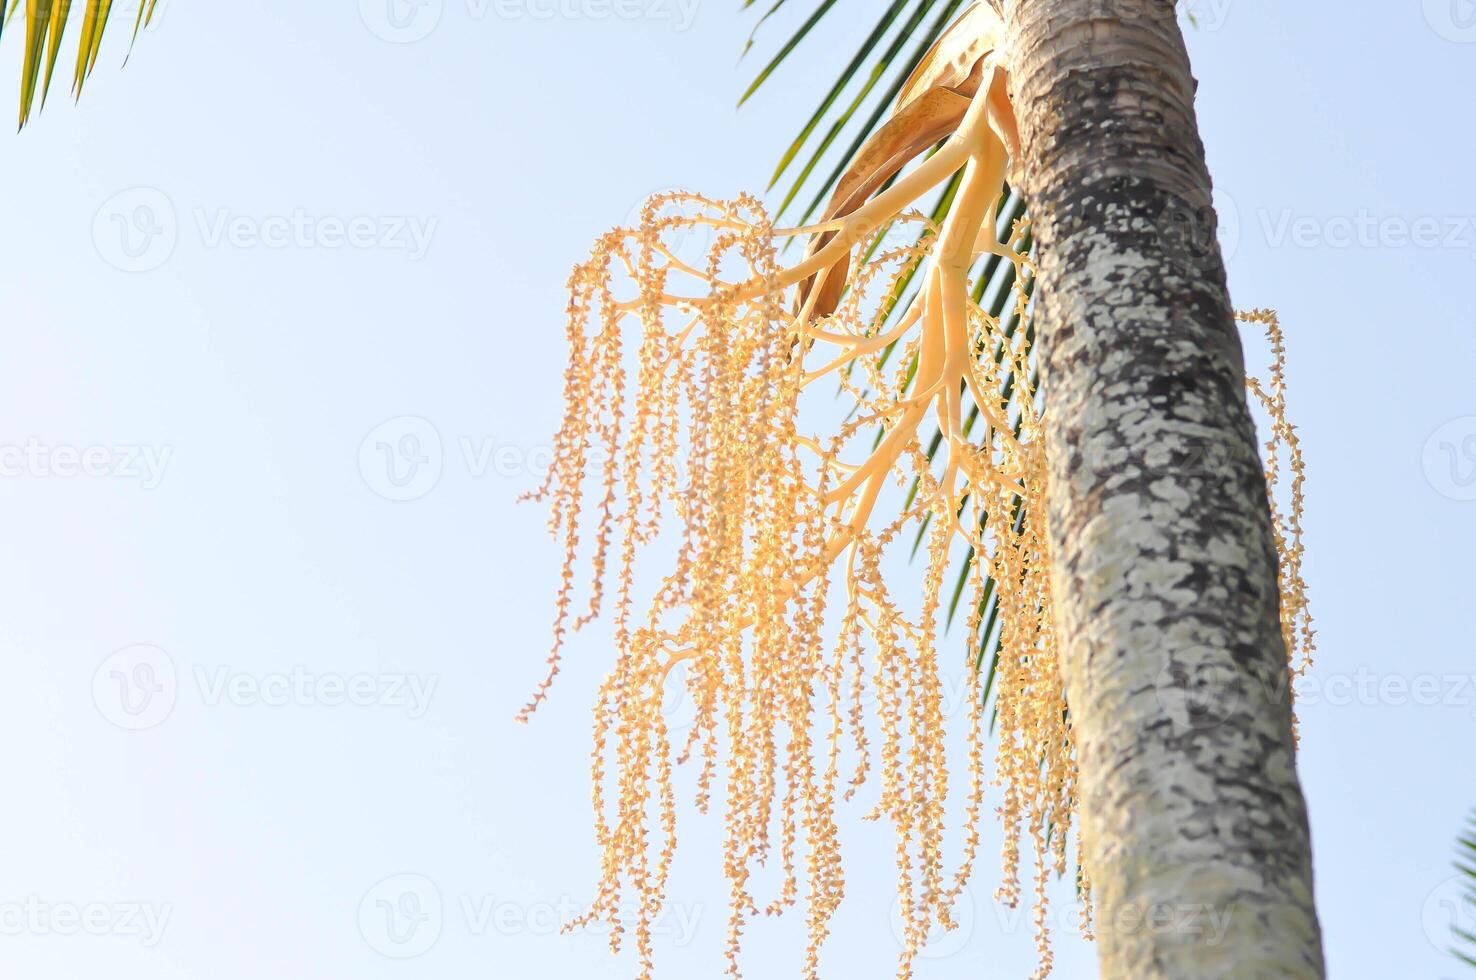 normanbya Normanbyi, wodyetia bifurcata ak irvine eller rävsvans handflatan eller Arecaceae eller palmae eller utsäde av betel handflatan eller betel nöt och himmel foto